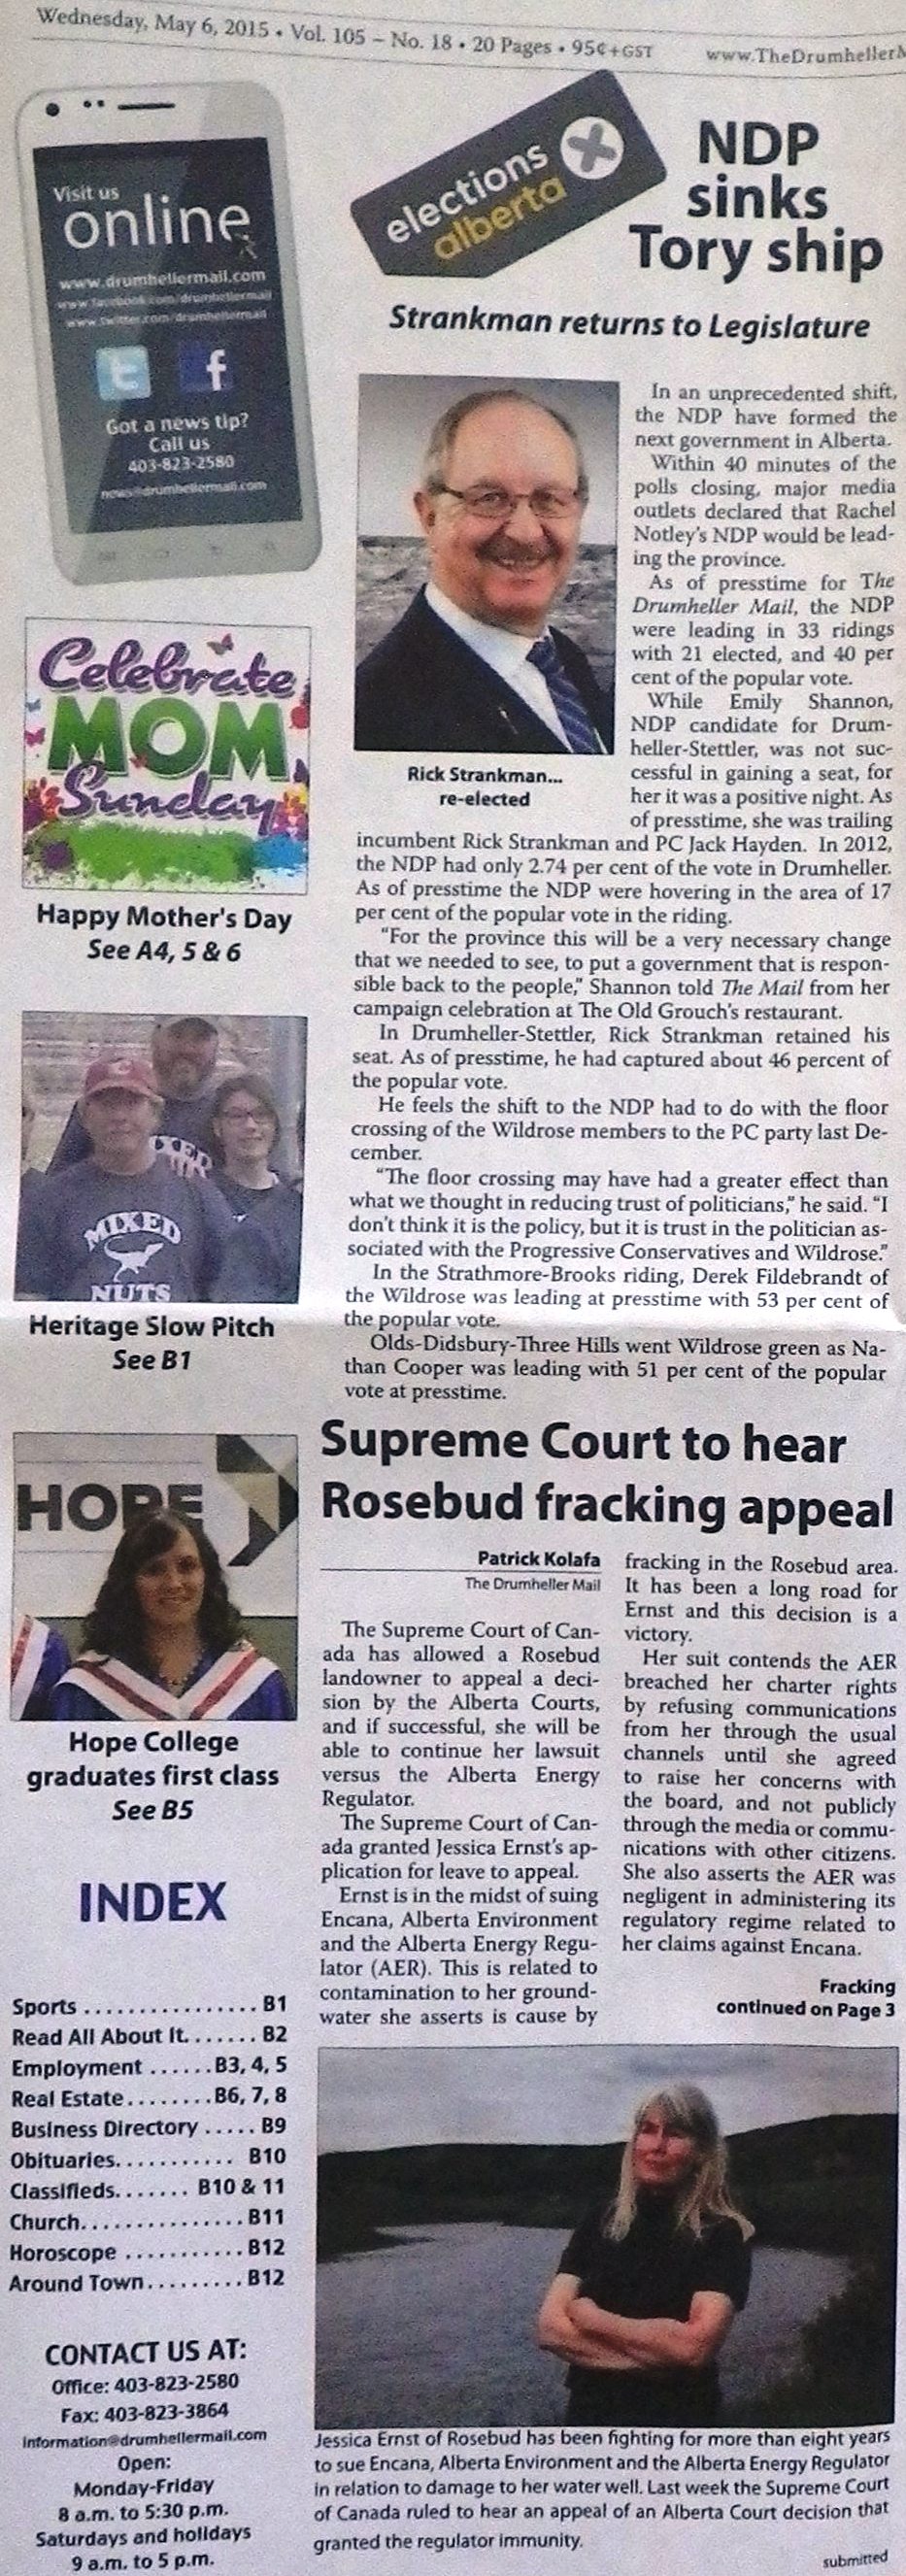 2015 05 06 Drumheller Mail Front Page, Supreme Court to hear Rosebud Fracking appeal